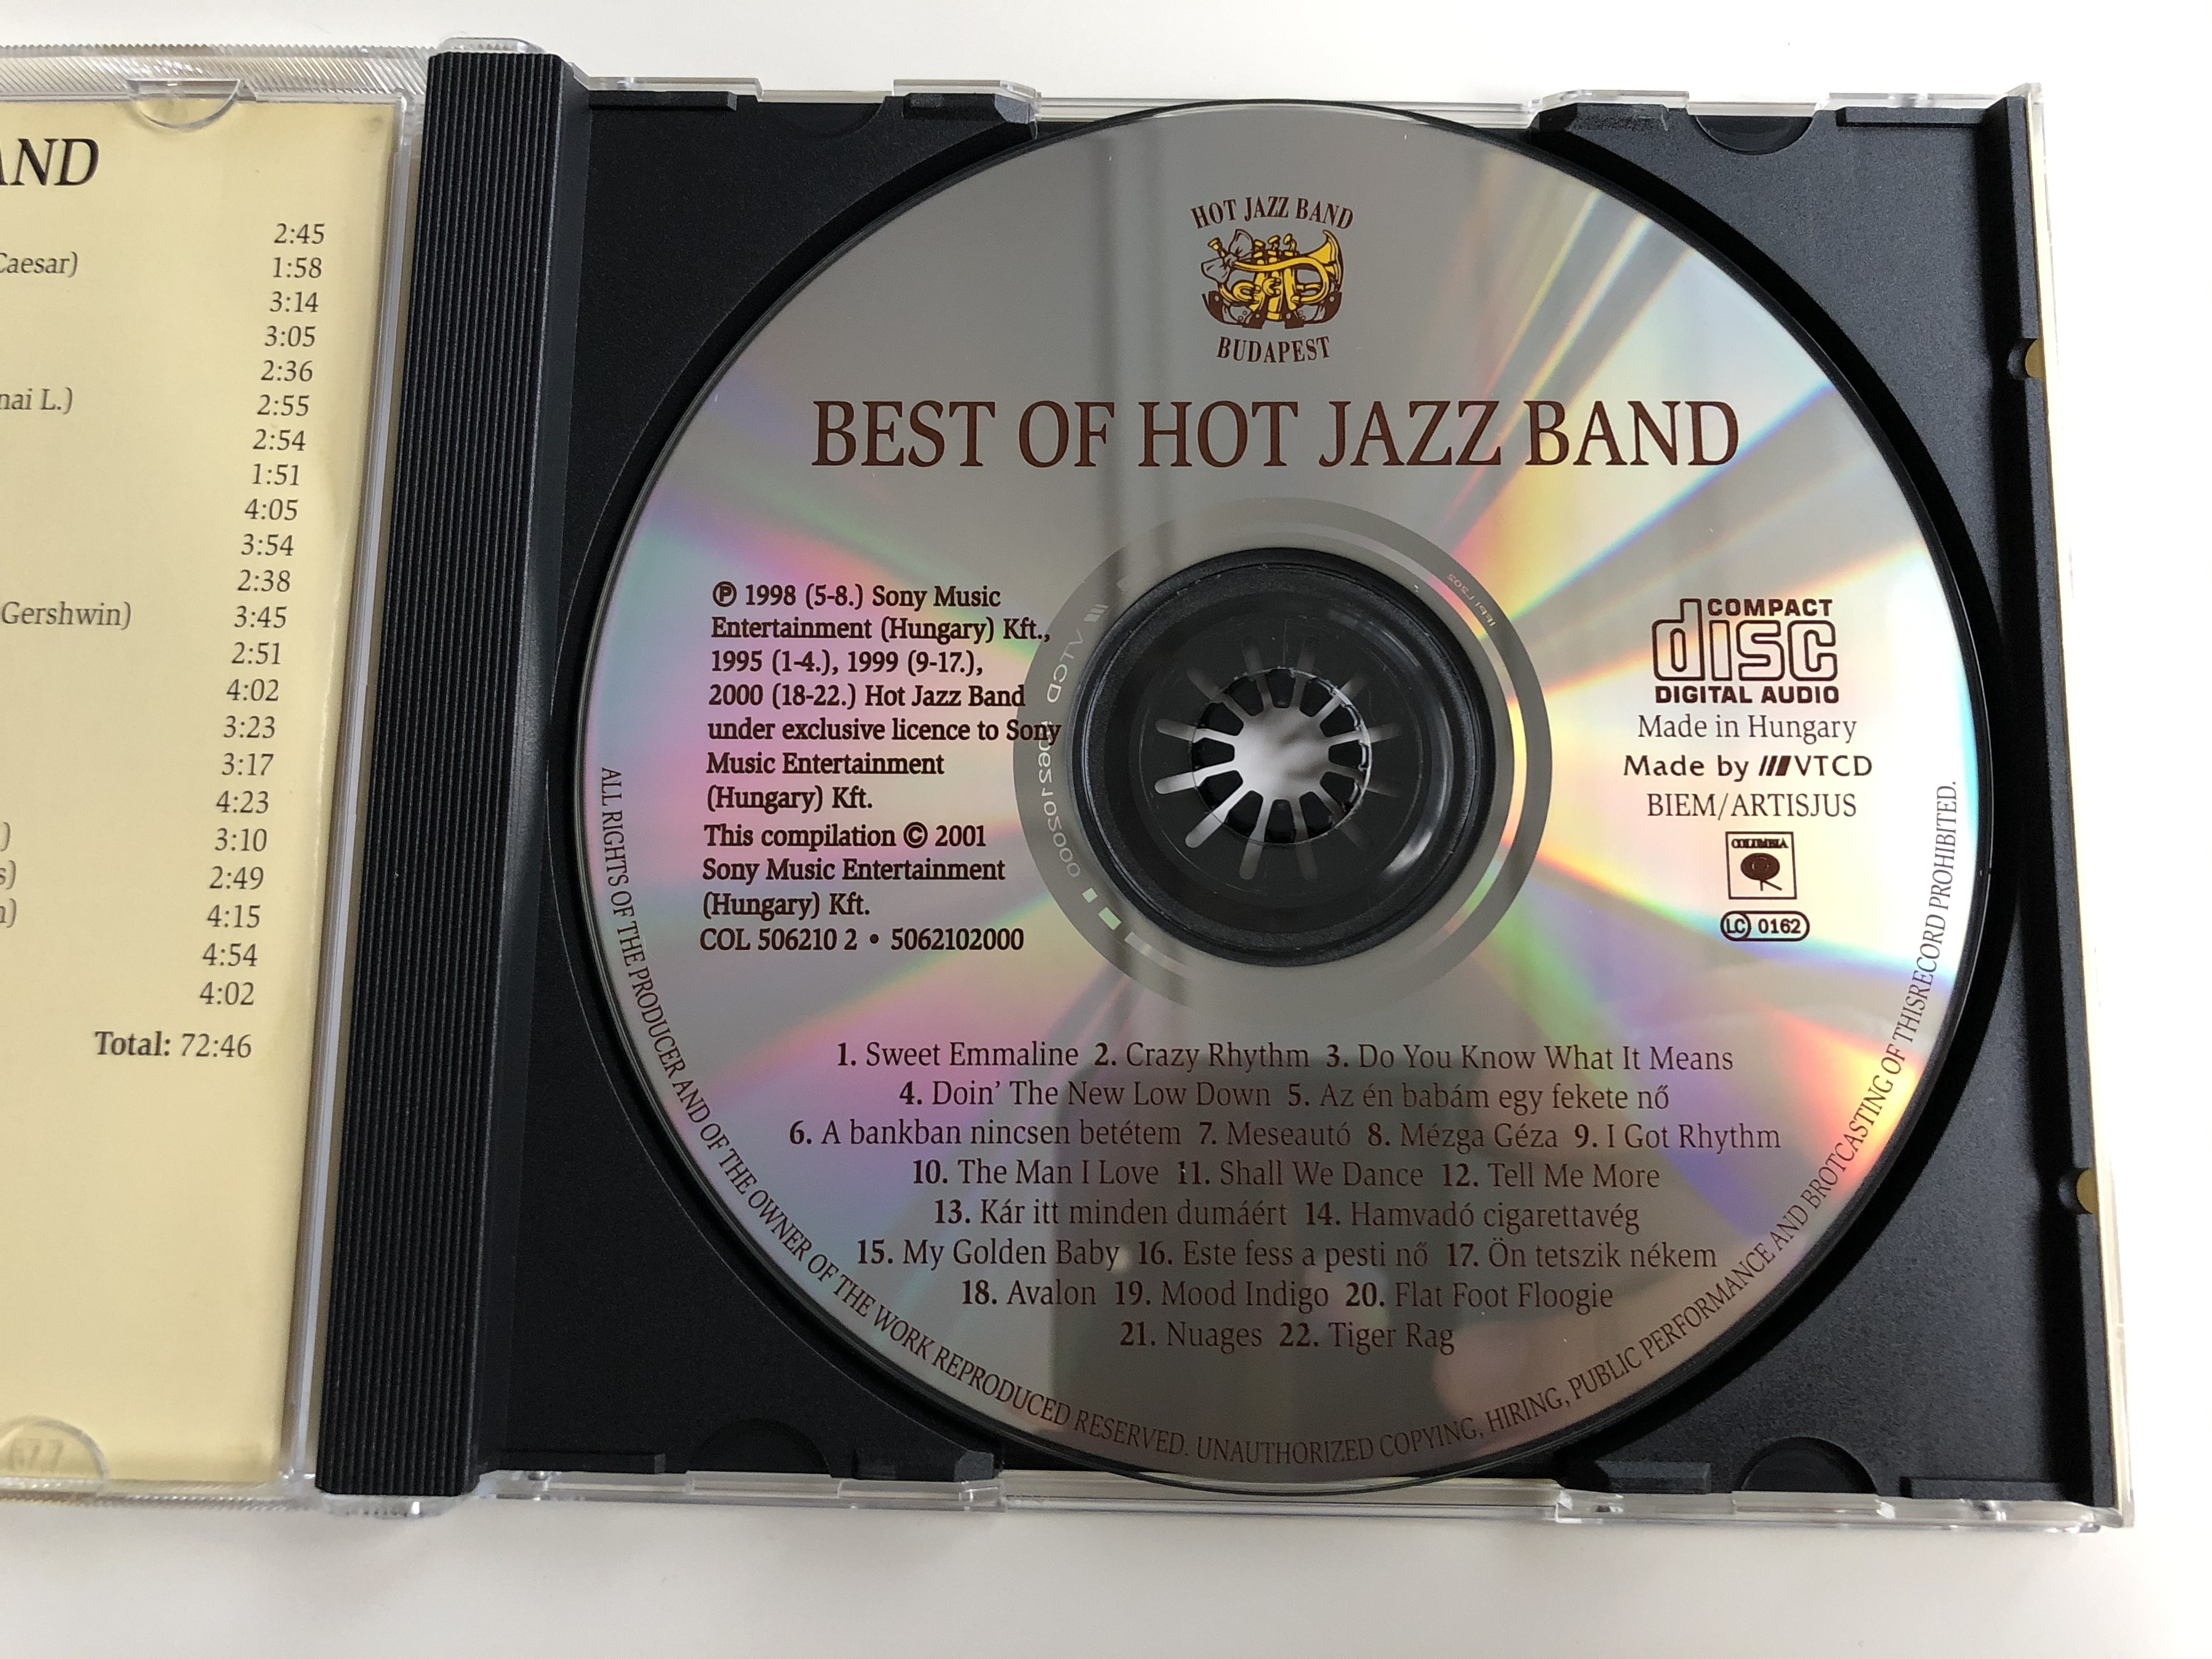 best-of-hot-jazz-band-sony-music-entertain-audio-cd-1998-iso-9002-4-.jpg